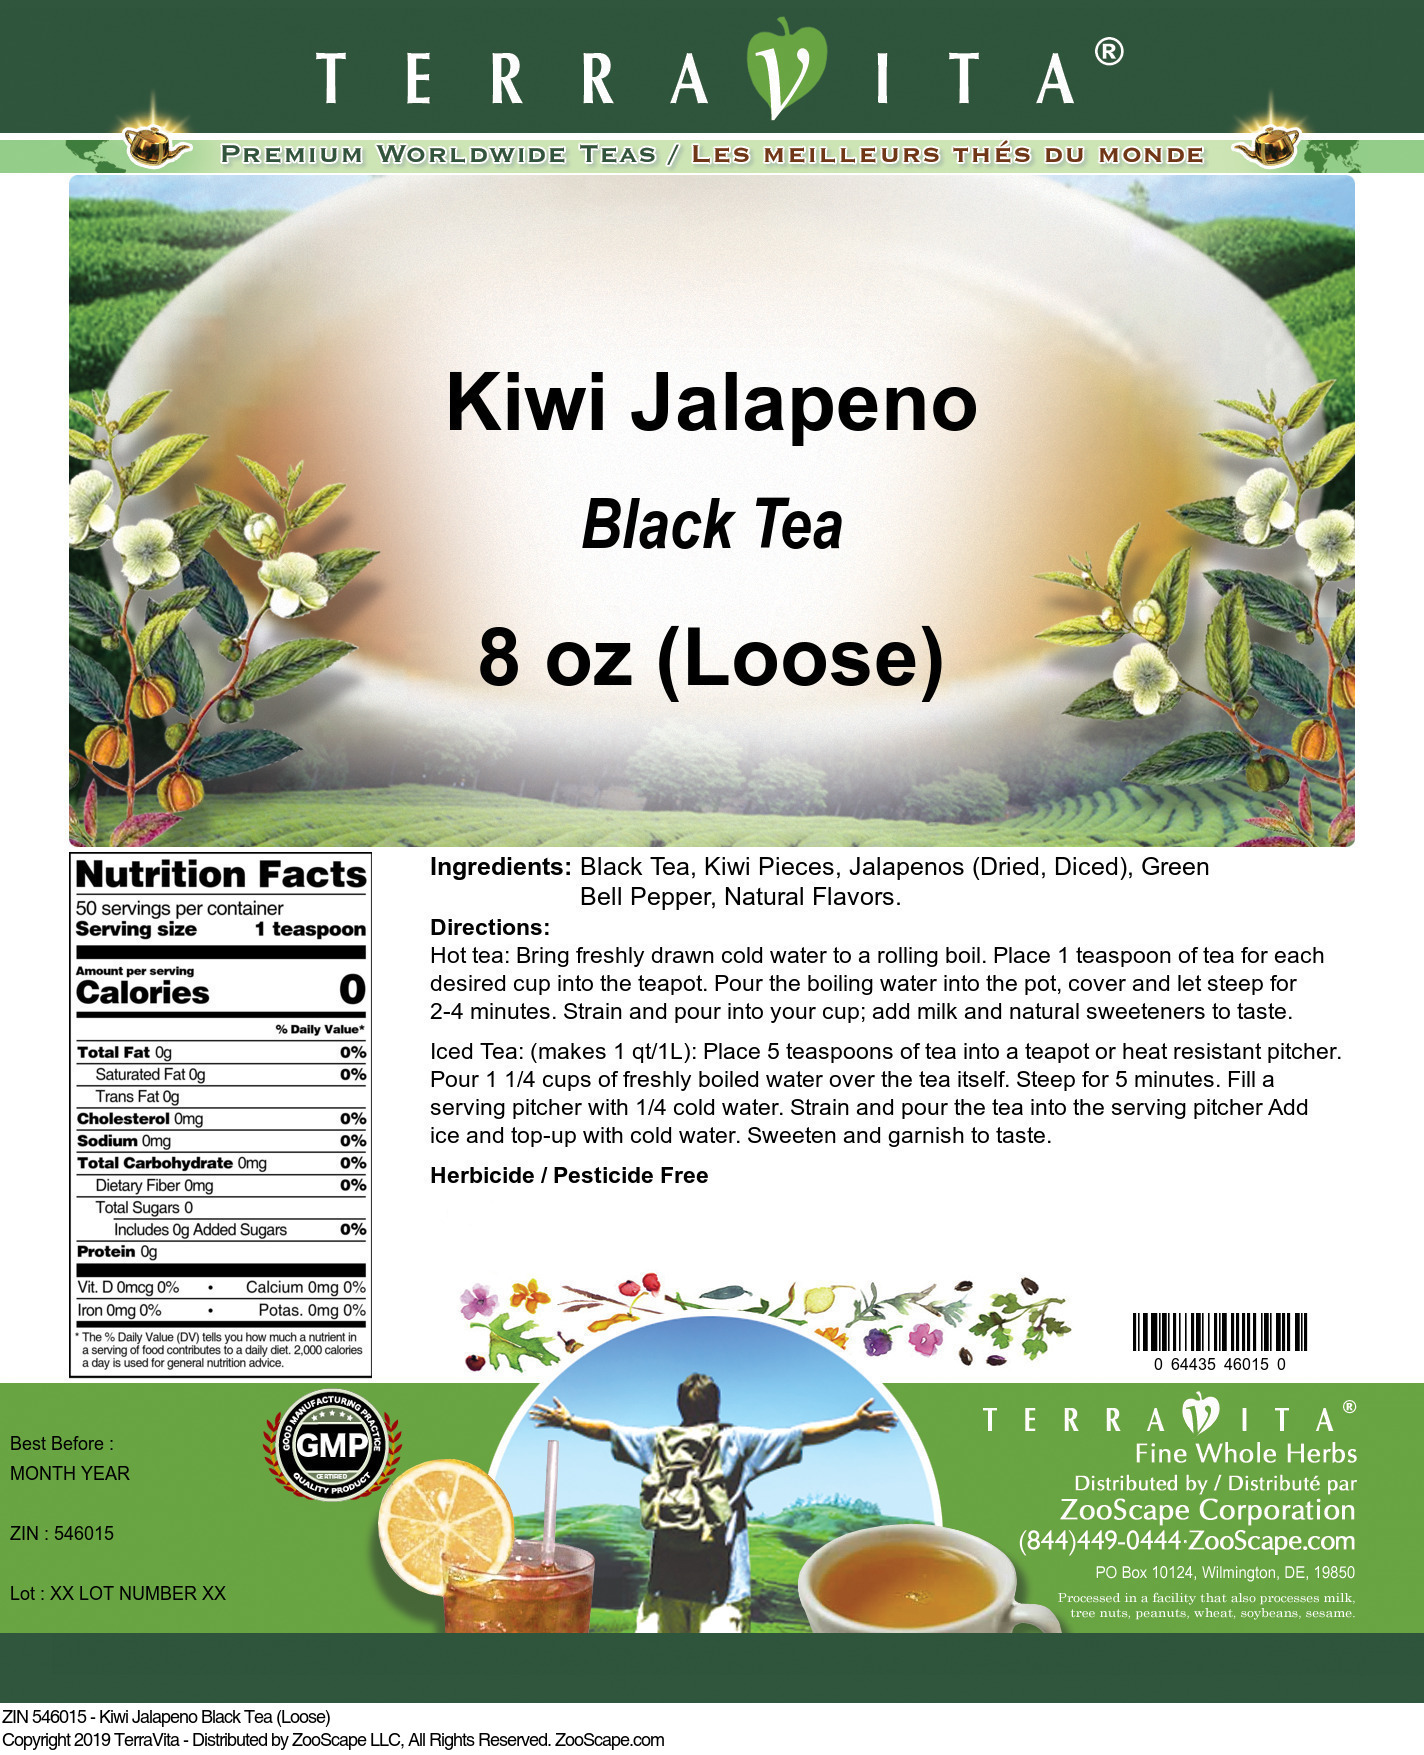 Kiwi Jalapeno Black Tea (Loose) - Label